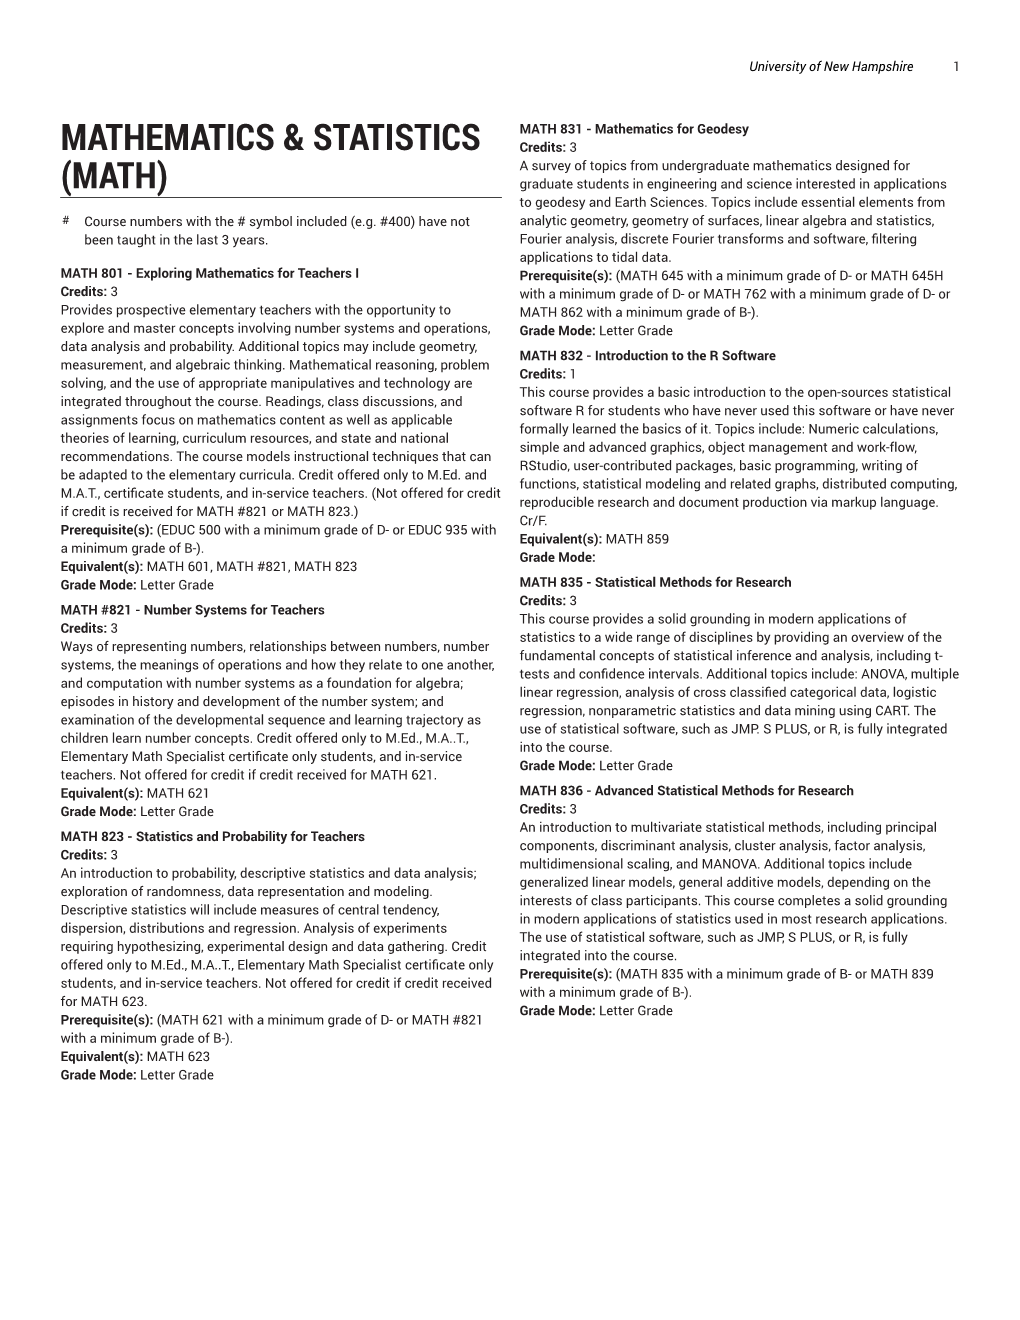 Mathematics & Statistics (MATH)